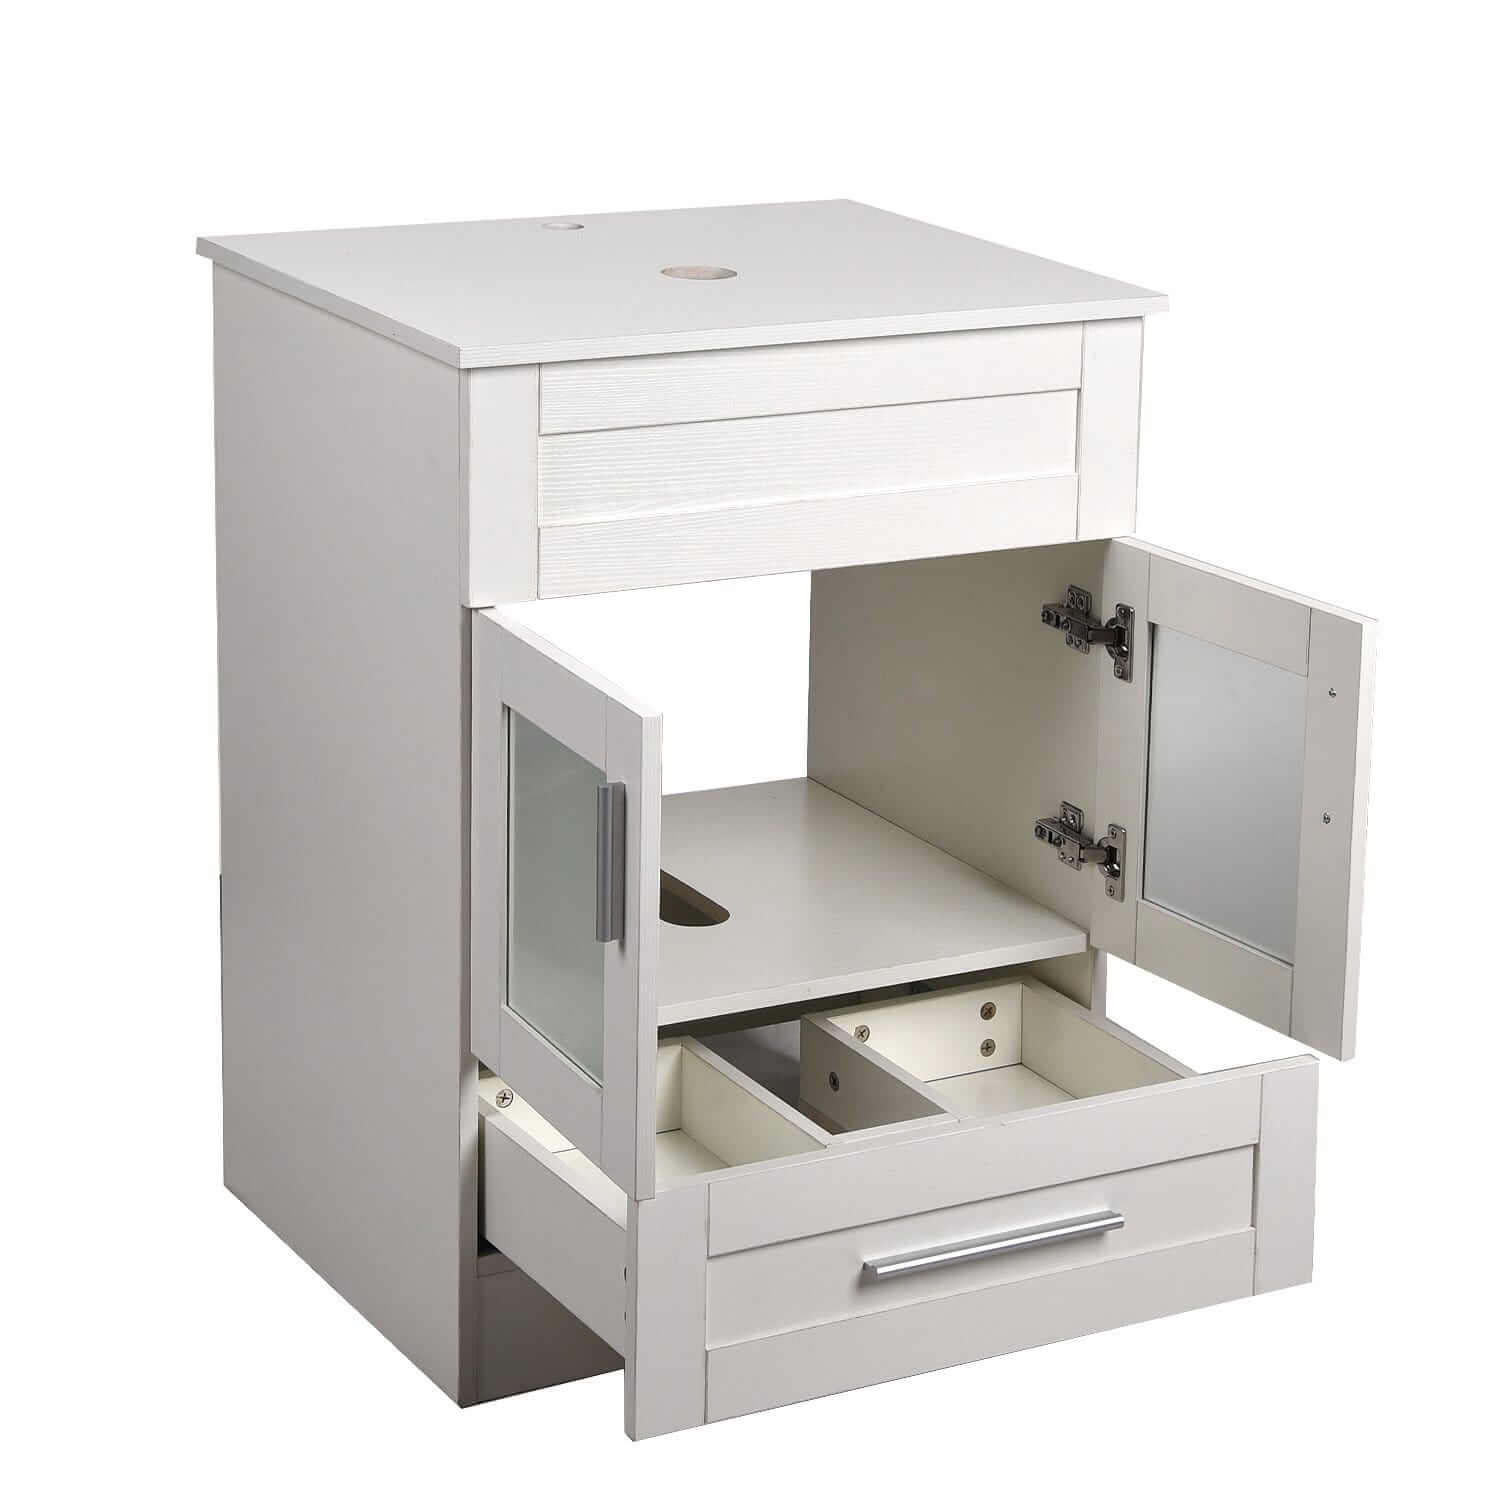 Elecwish 24" wood bathroom vanity Stand pedestal cabinet has ample storage spaces